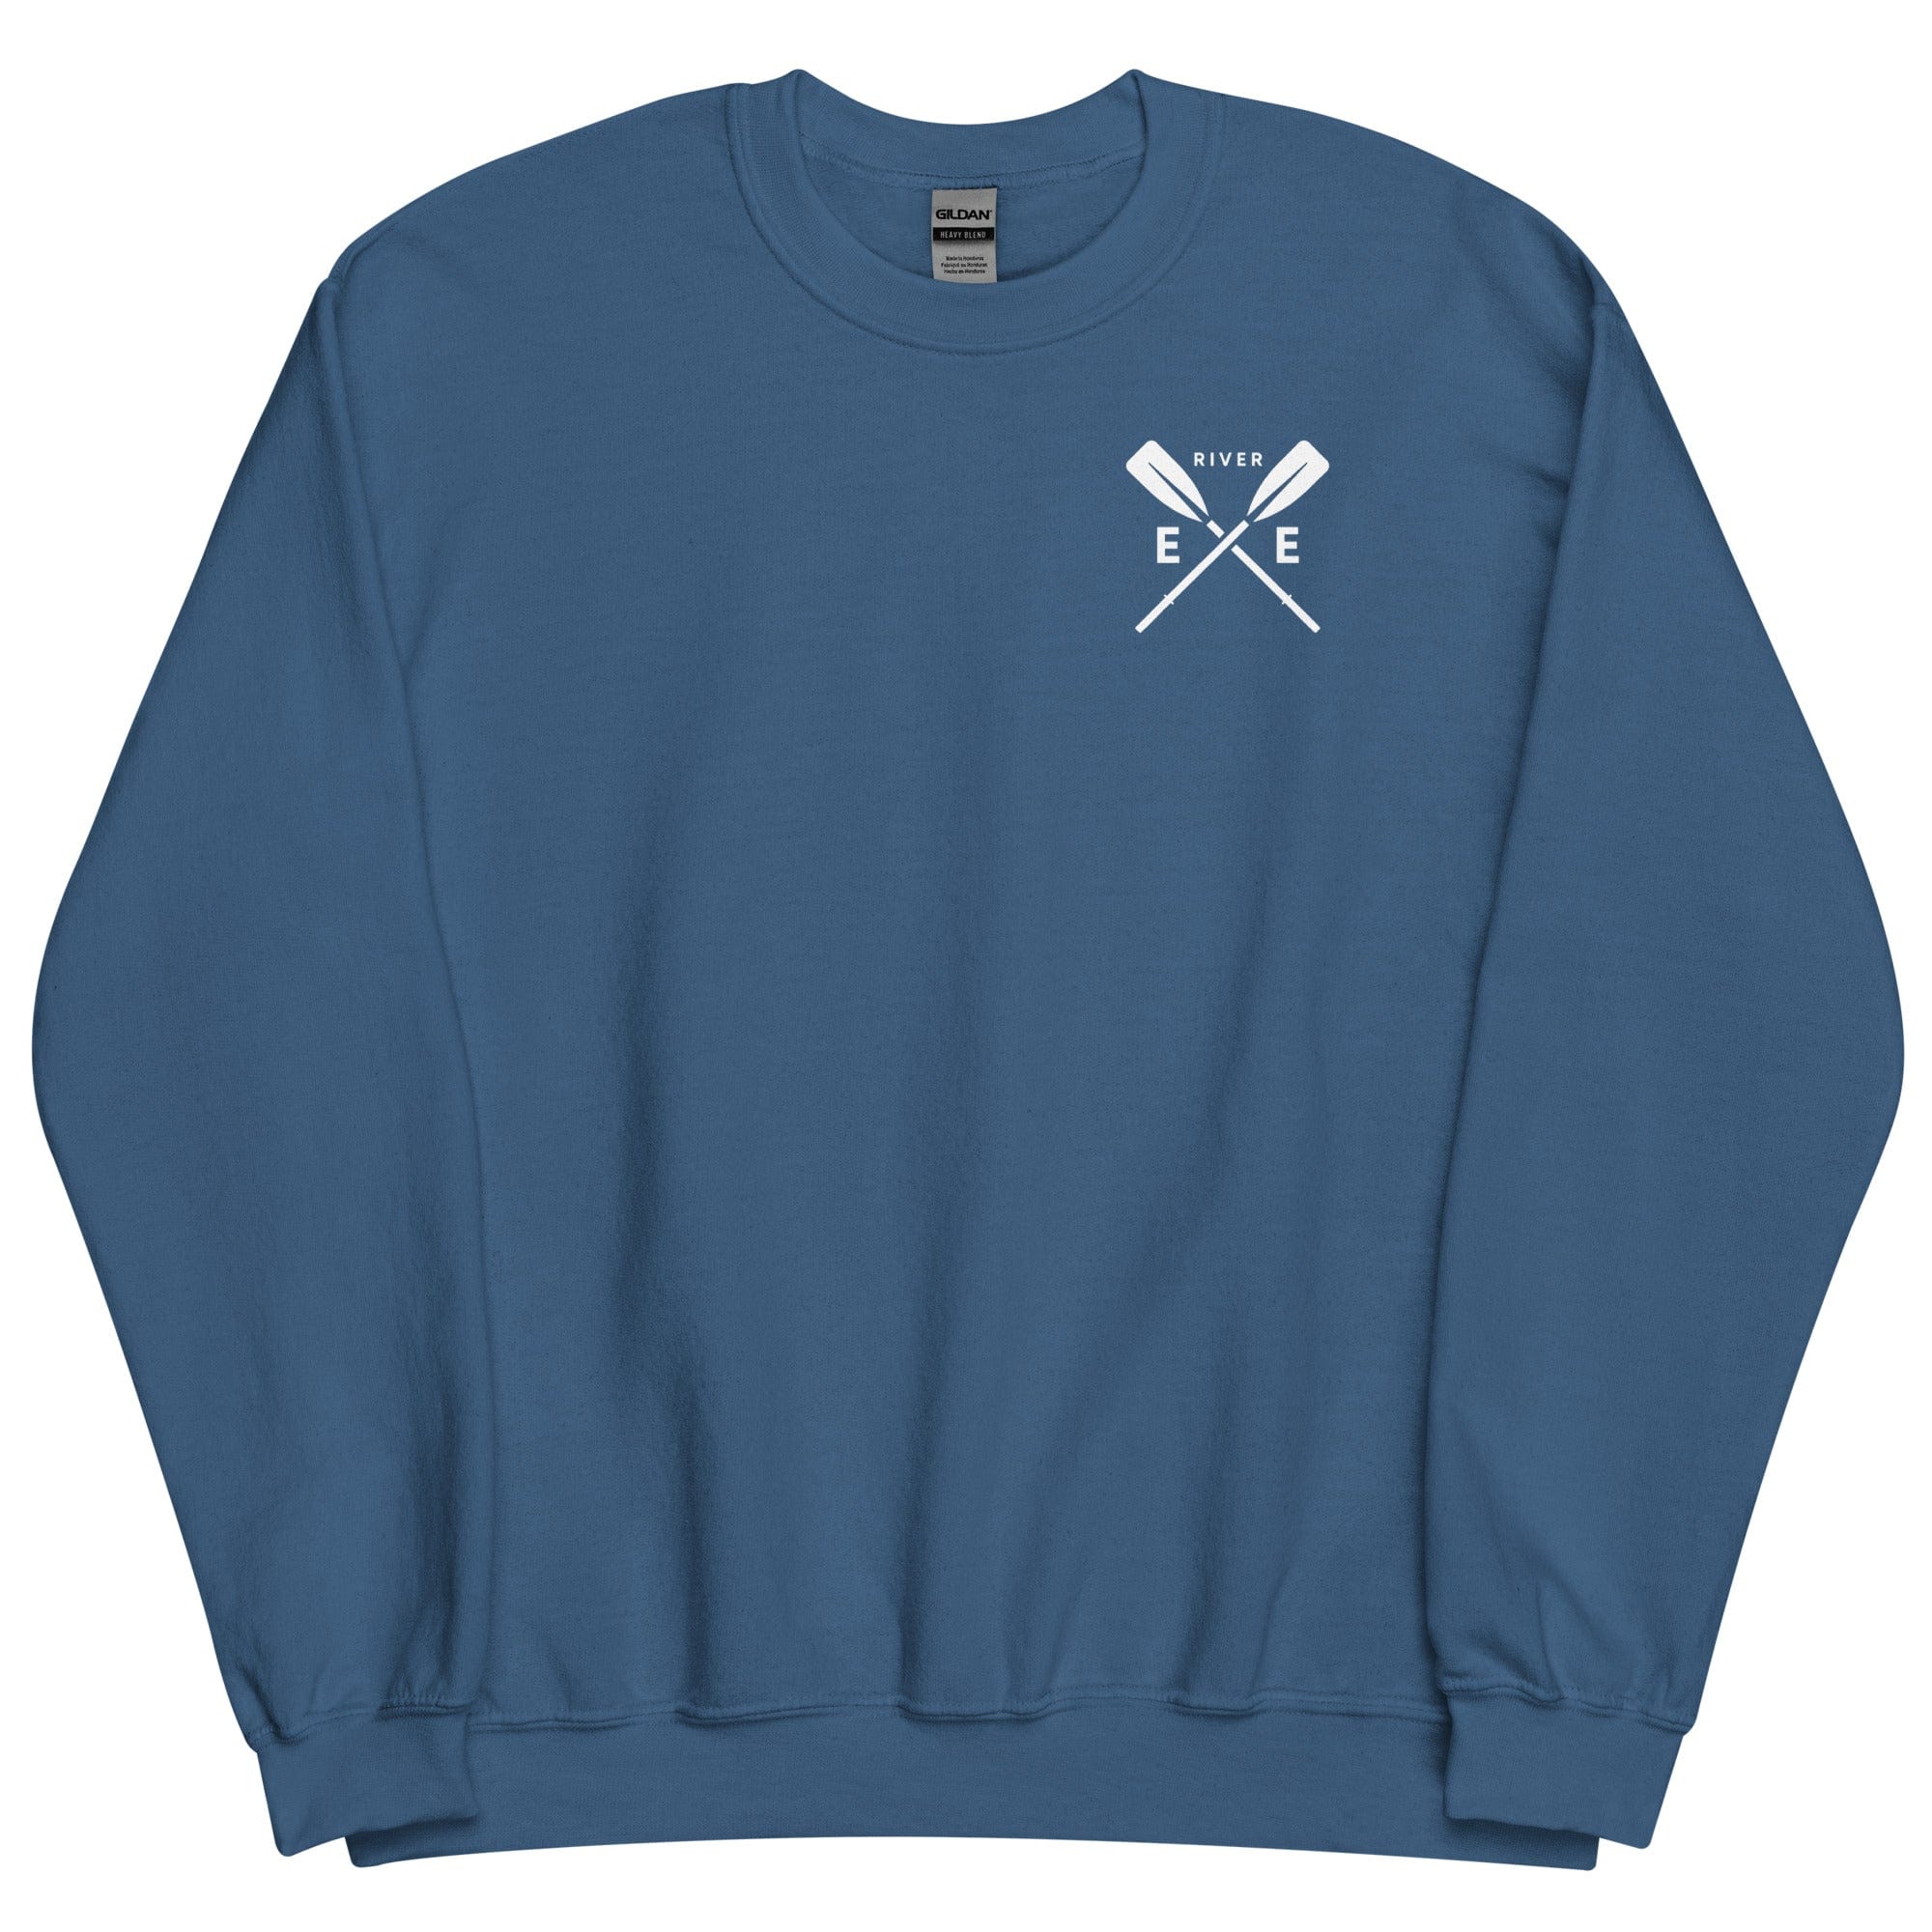 River Exe Sweatshirt Jumper | Exeter Gift Shop Indigo Blue / S Sweatshirt Jolly & Goode